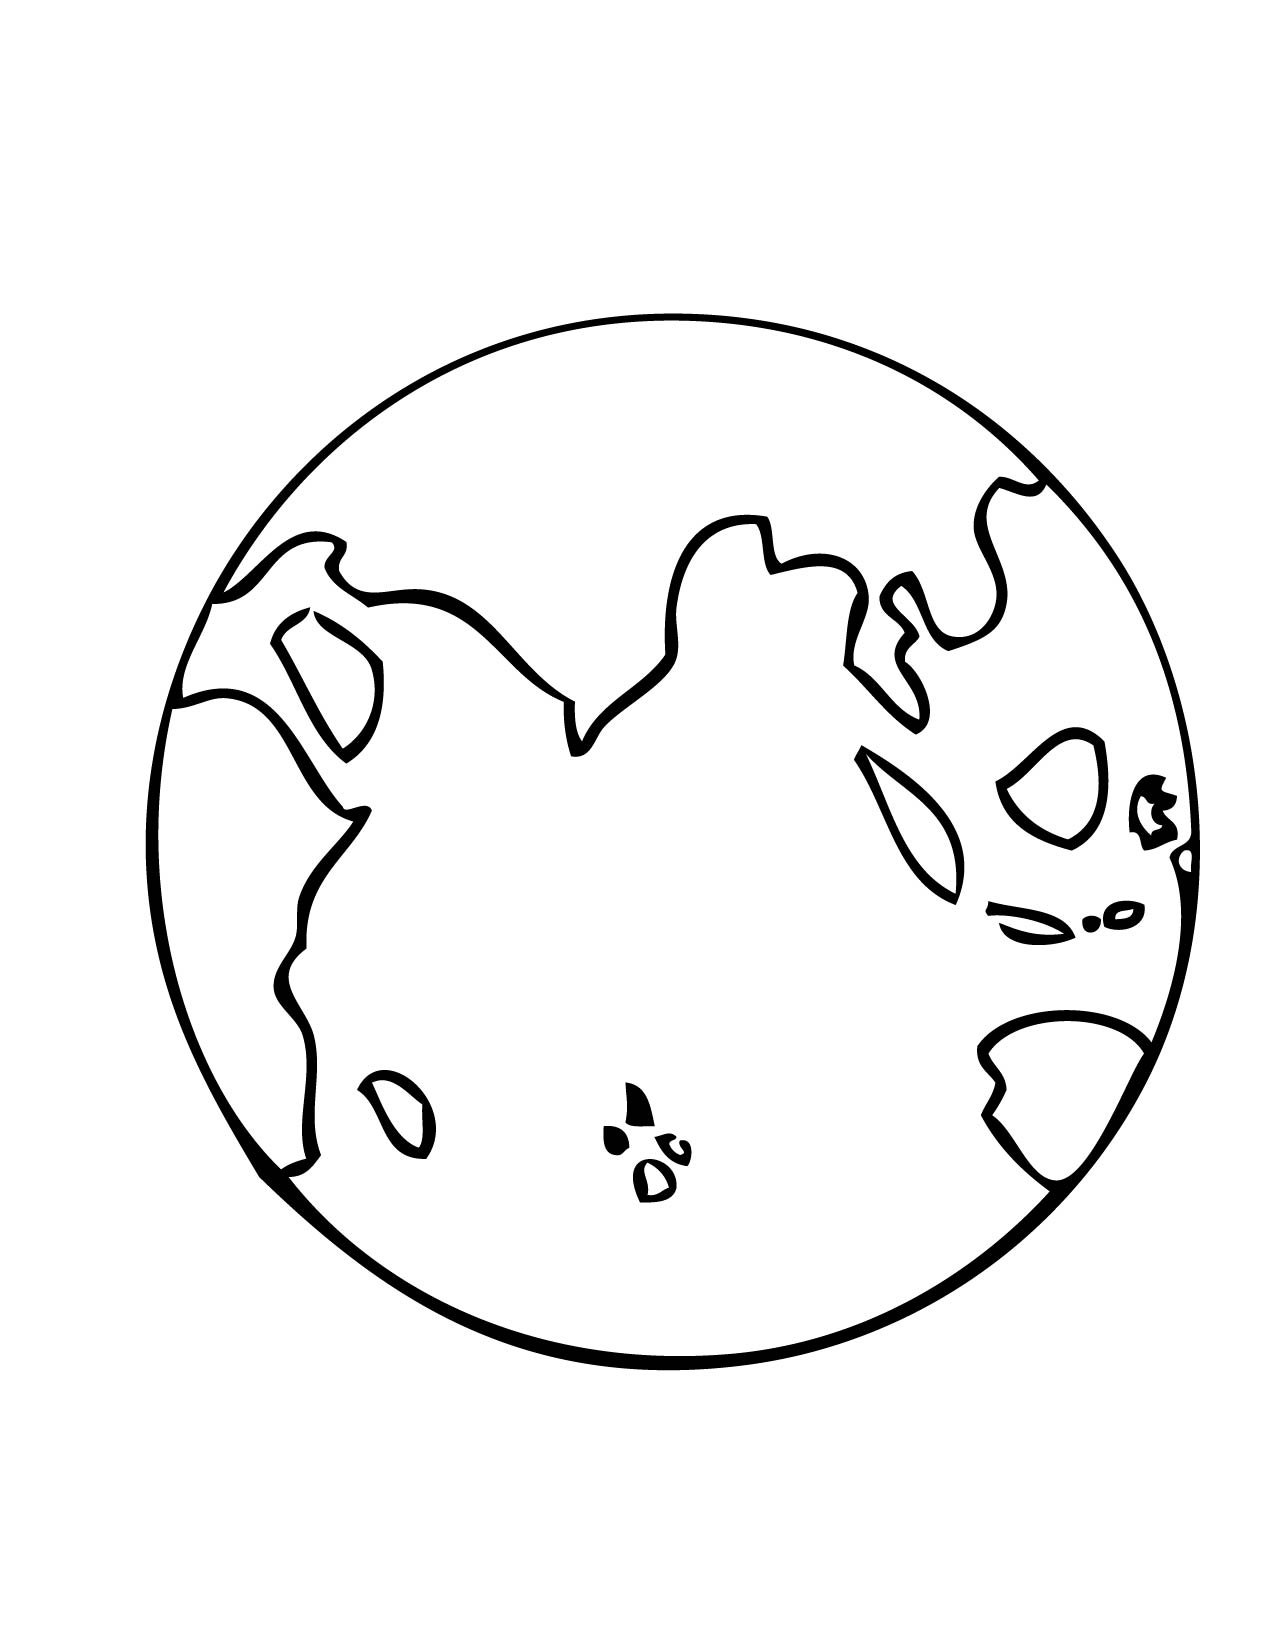 Земной шар контур